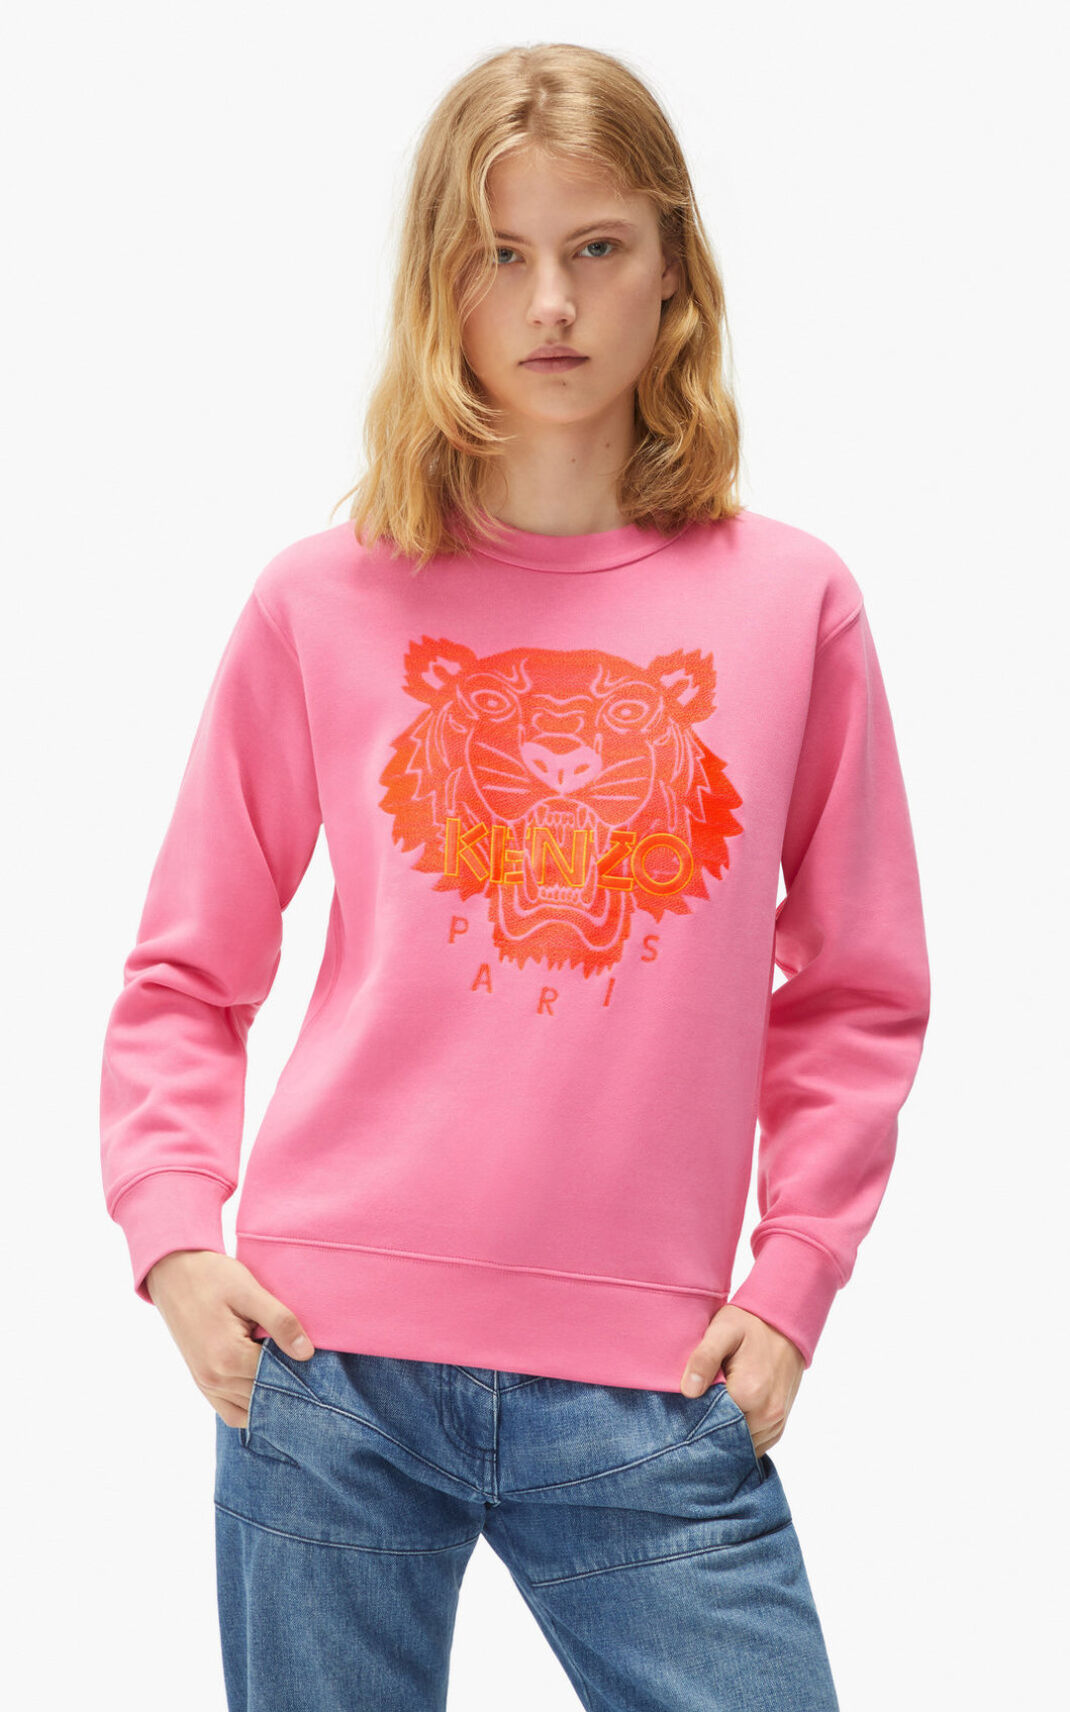 Sudadera Kenzo Tiger Mujer Rosas - SKU.0710648